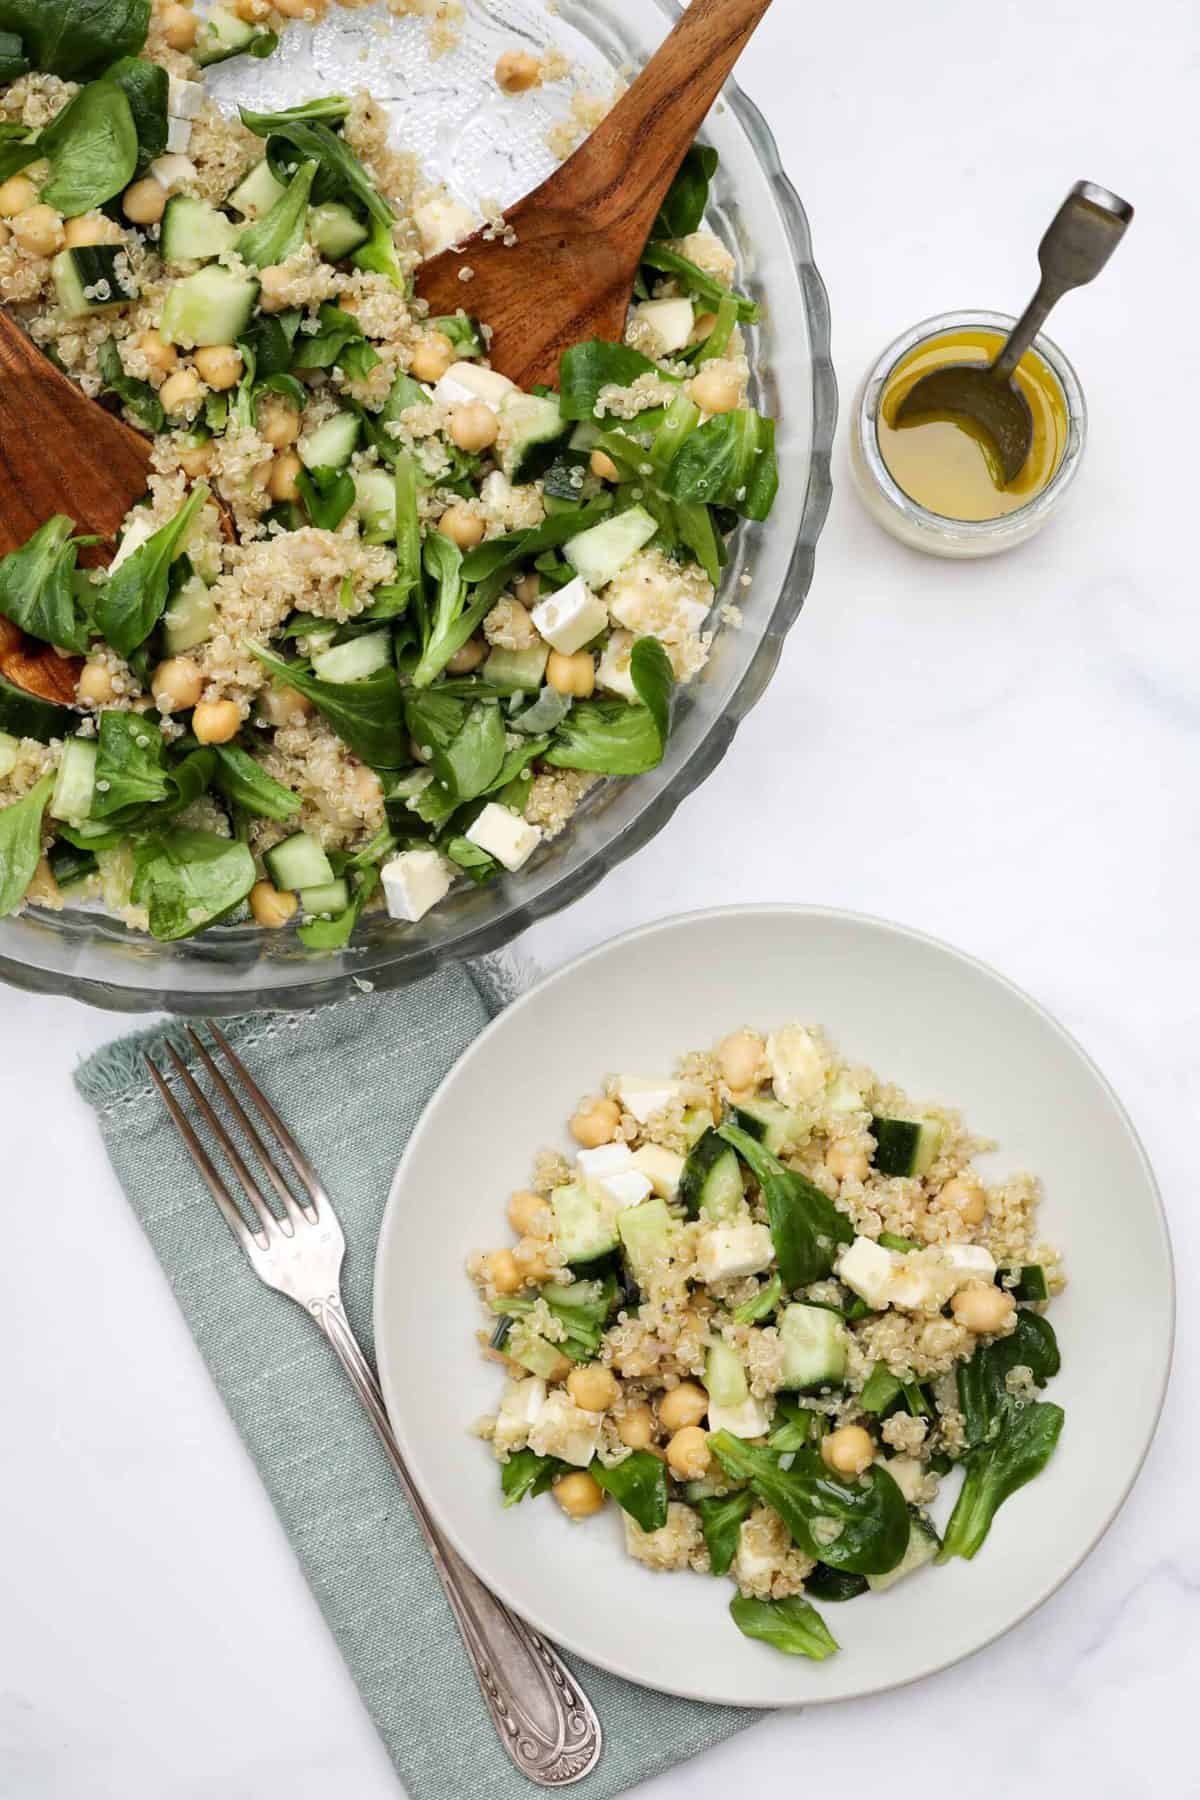 Plate of quinoa chickpea salad next to big bowl of salad and vinaigrette